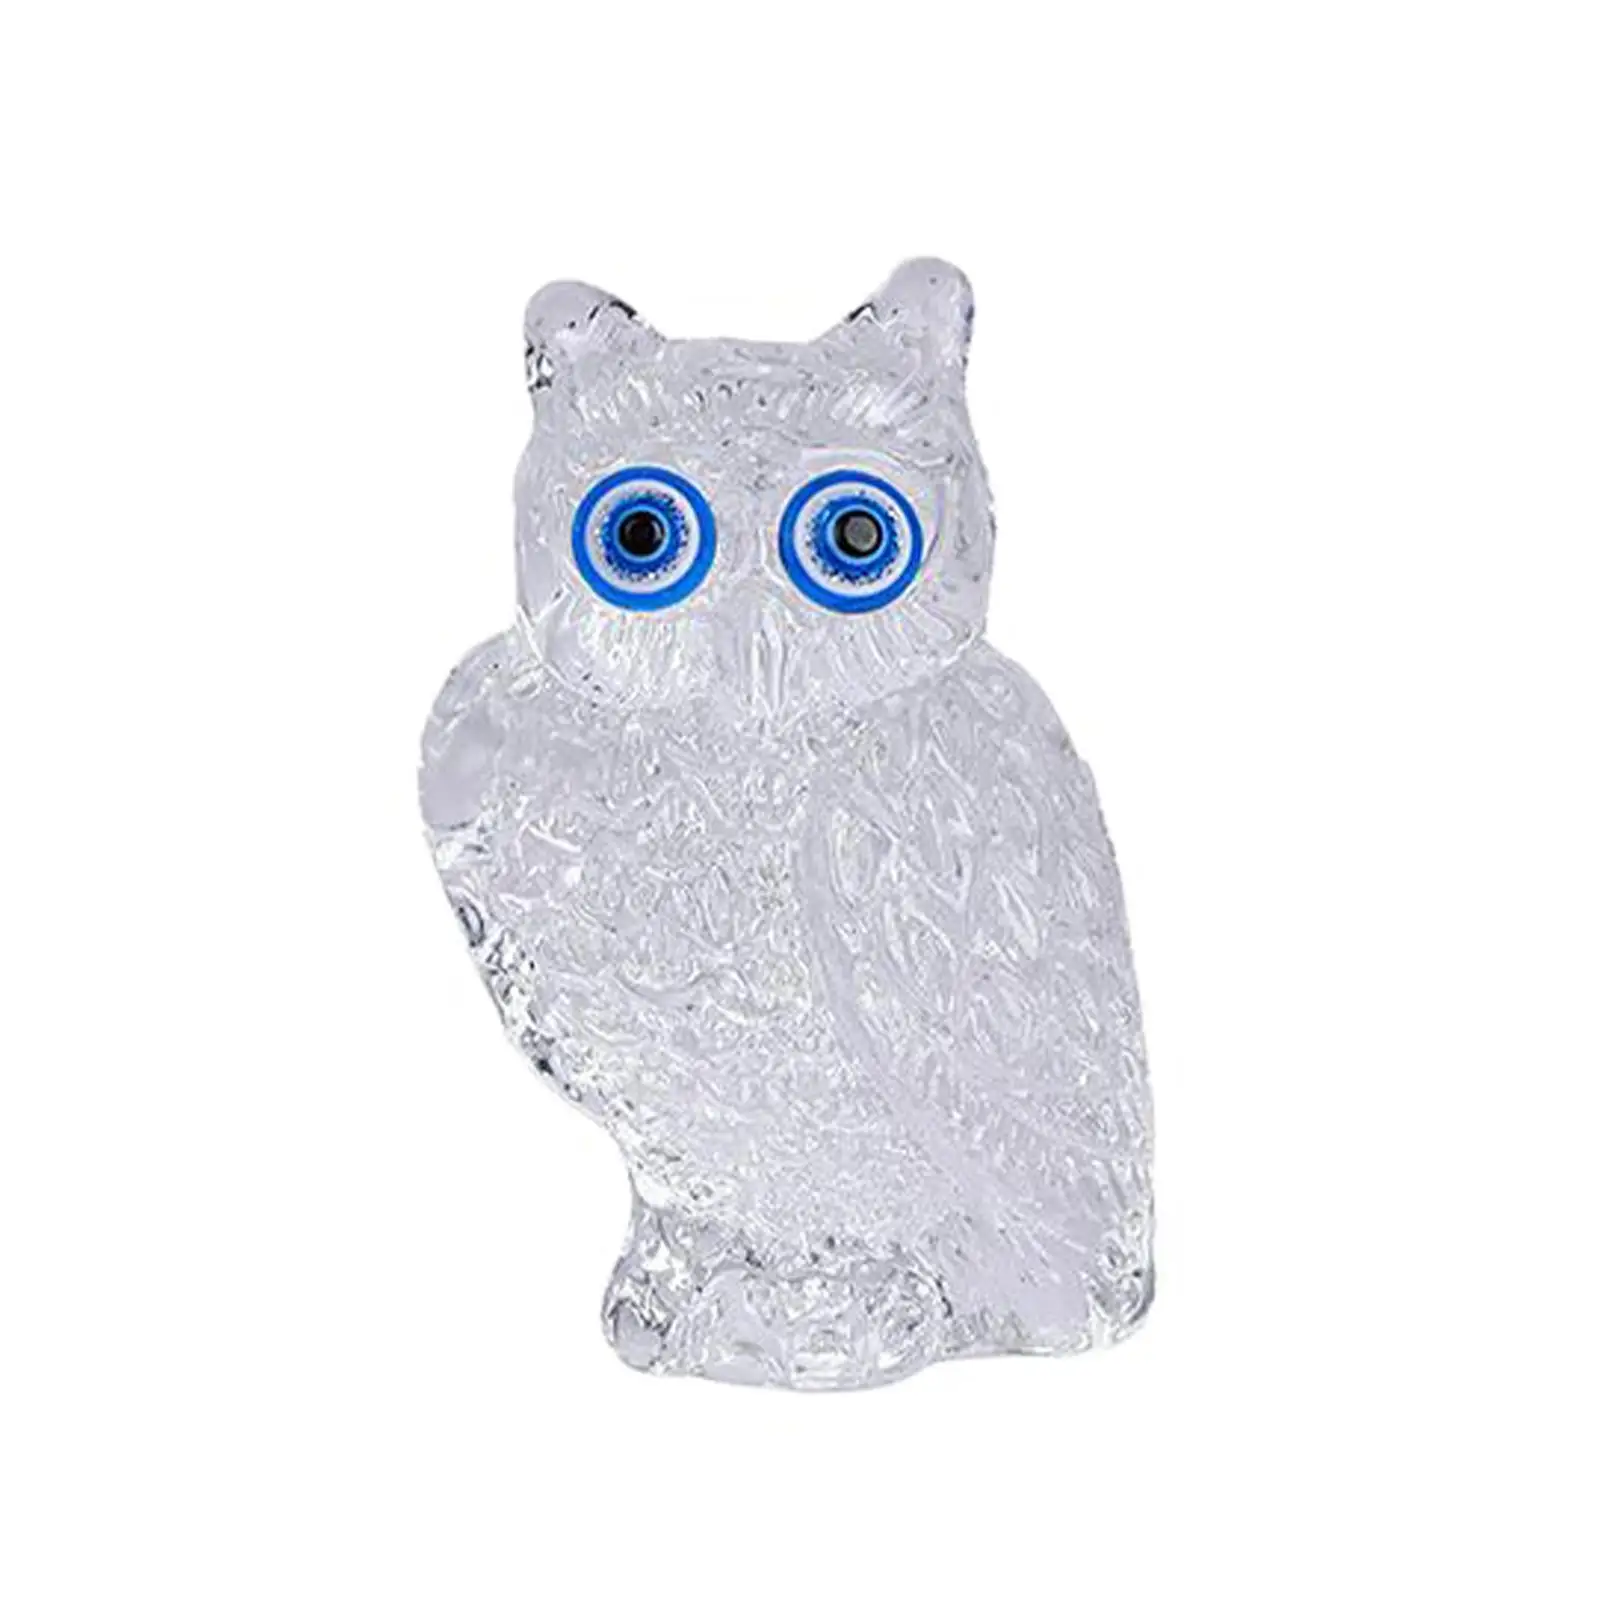 3D Crystal Owl Ornament Crafts Animal Sculpture Living Room Shelf Decor